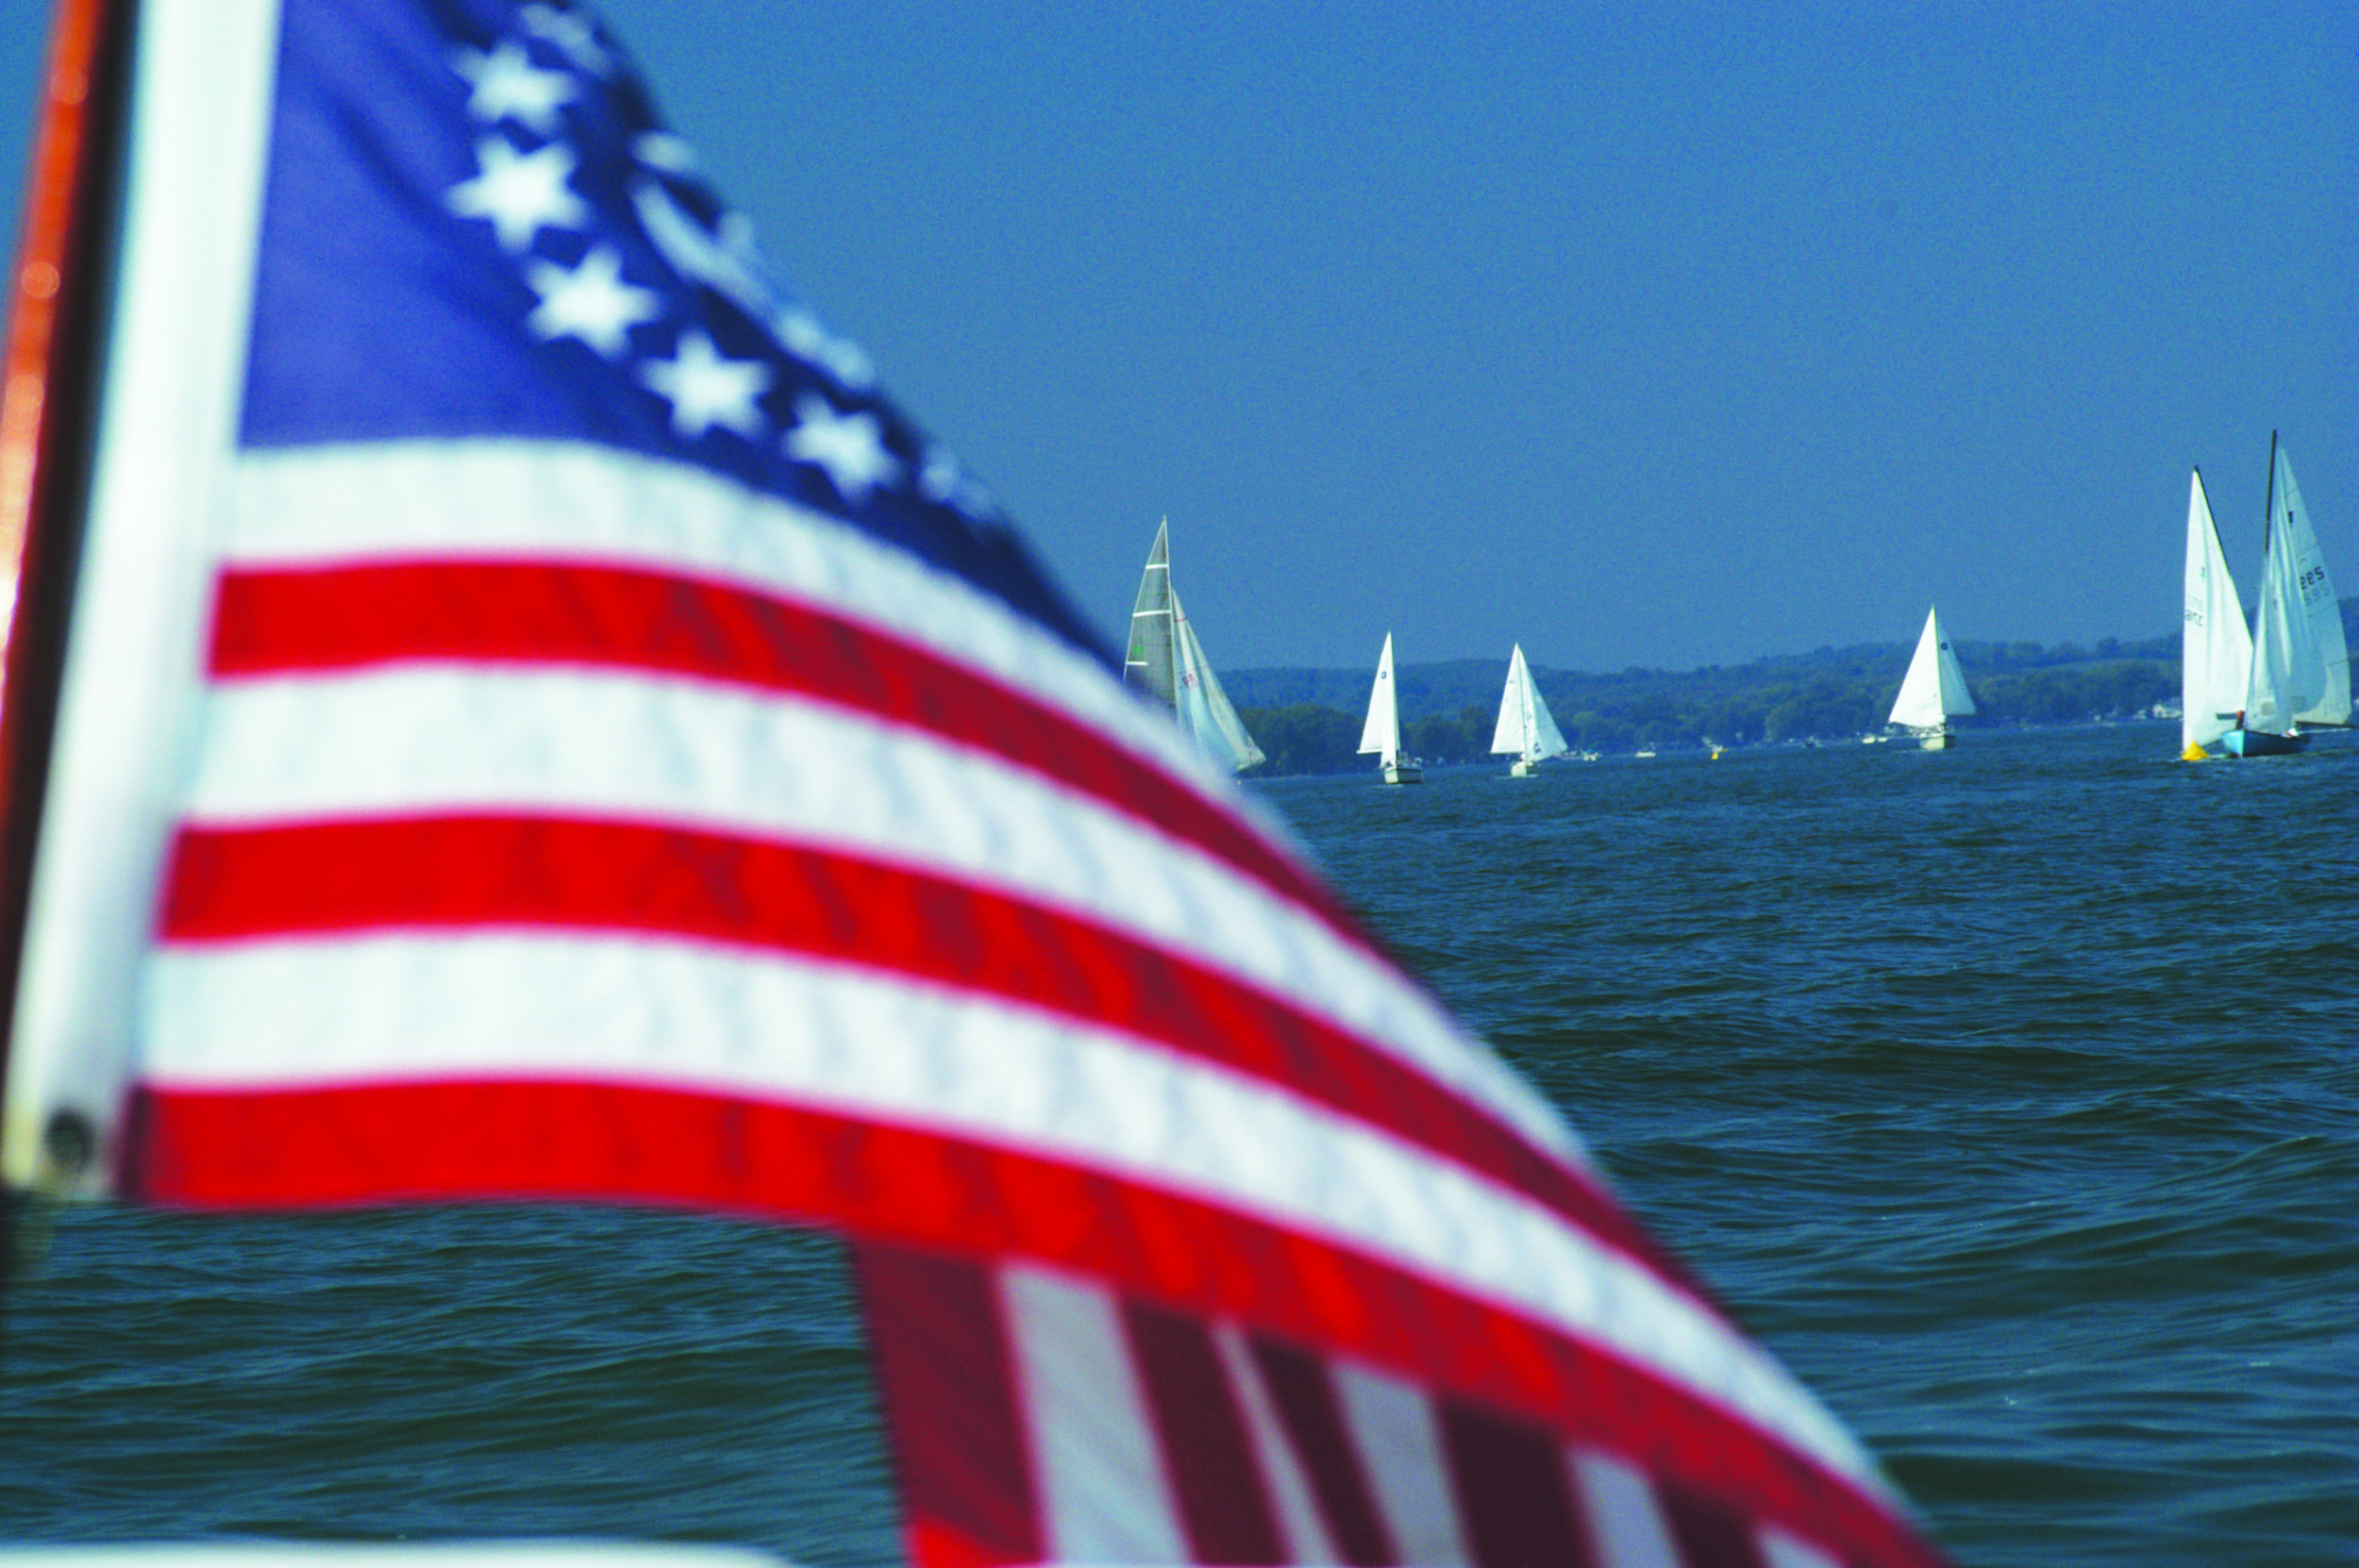 sailboats & stern flag.jpg